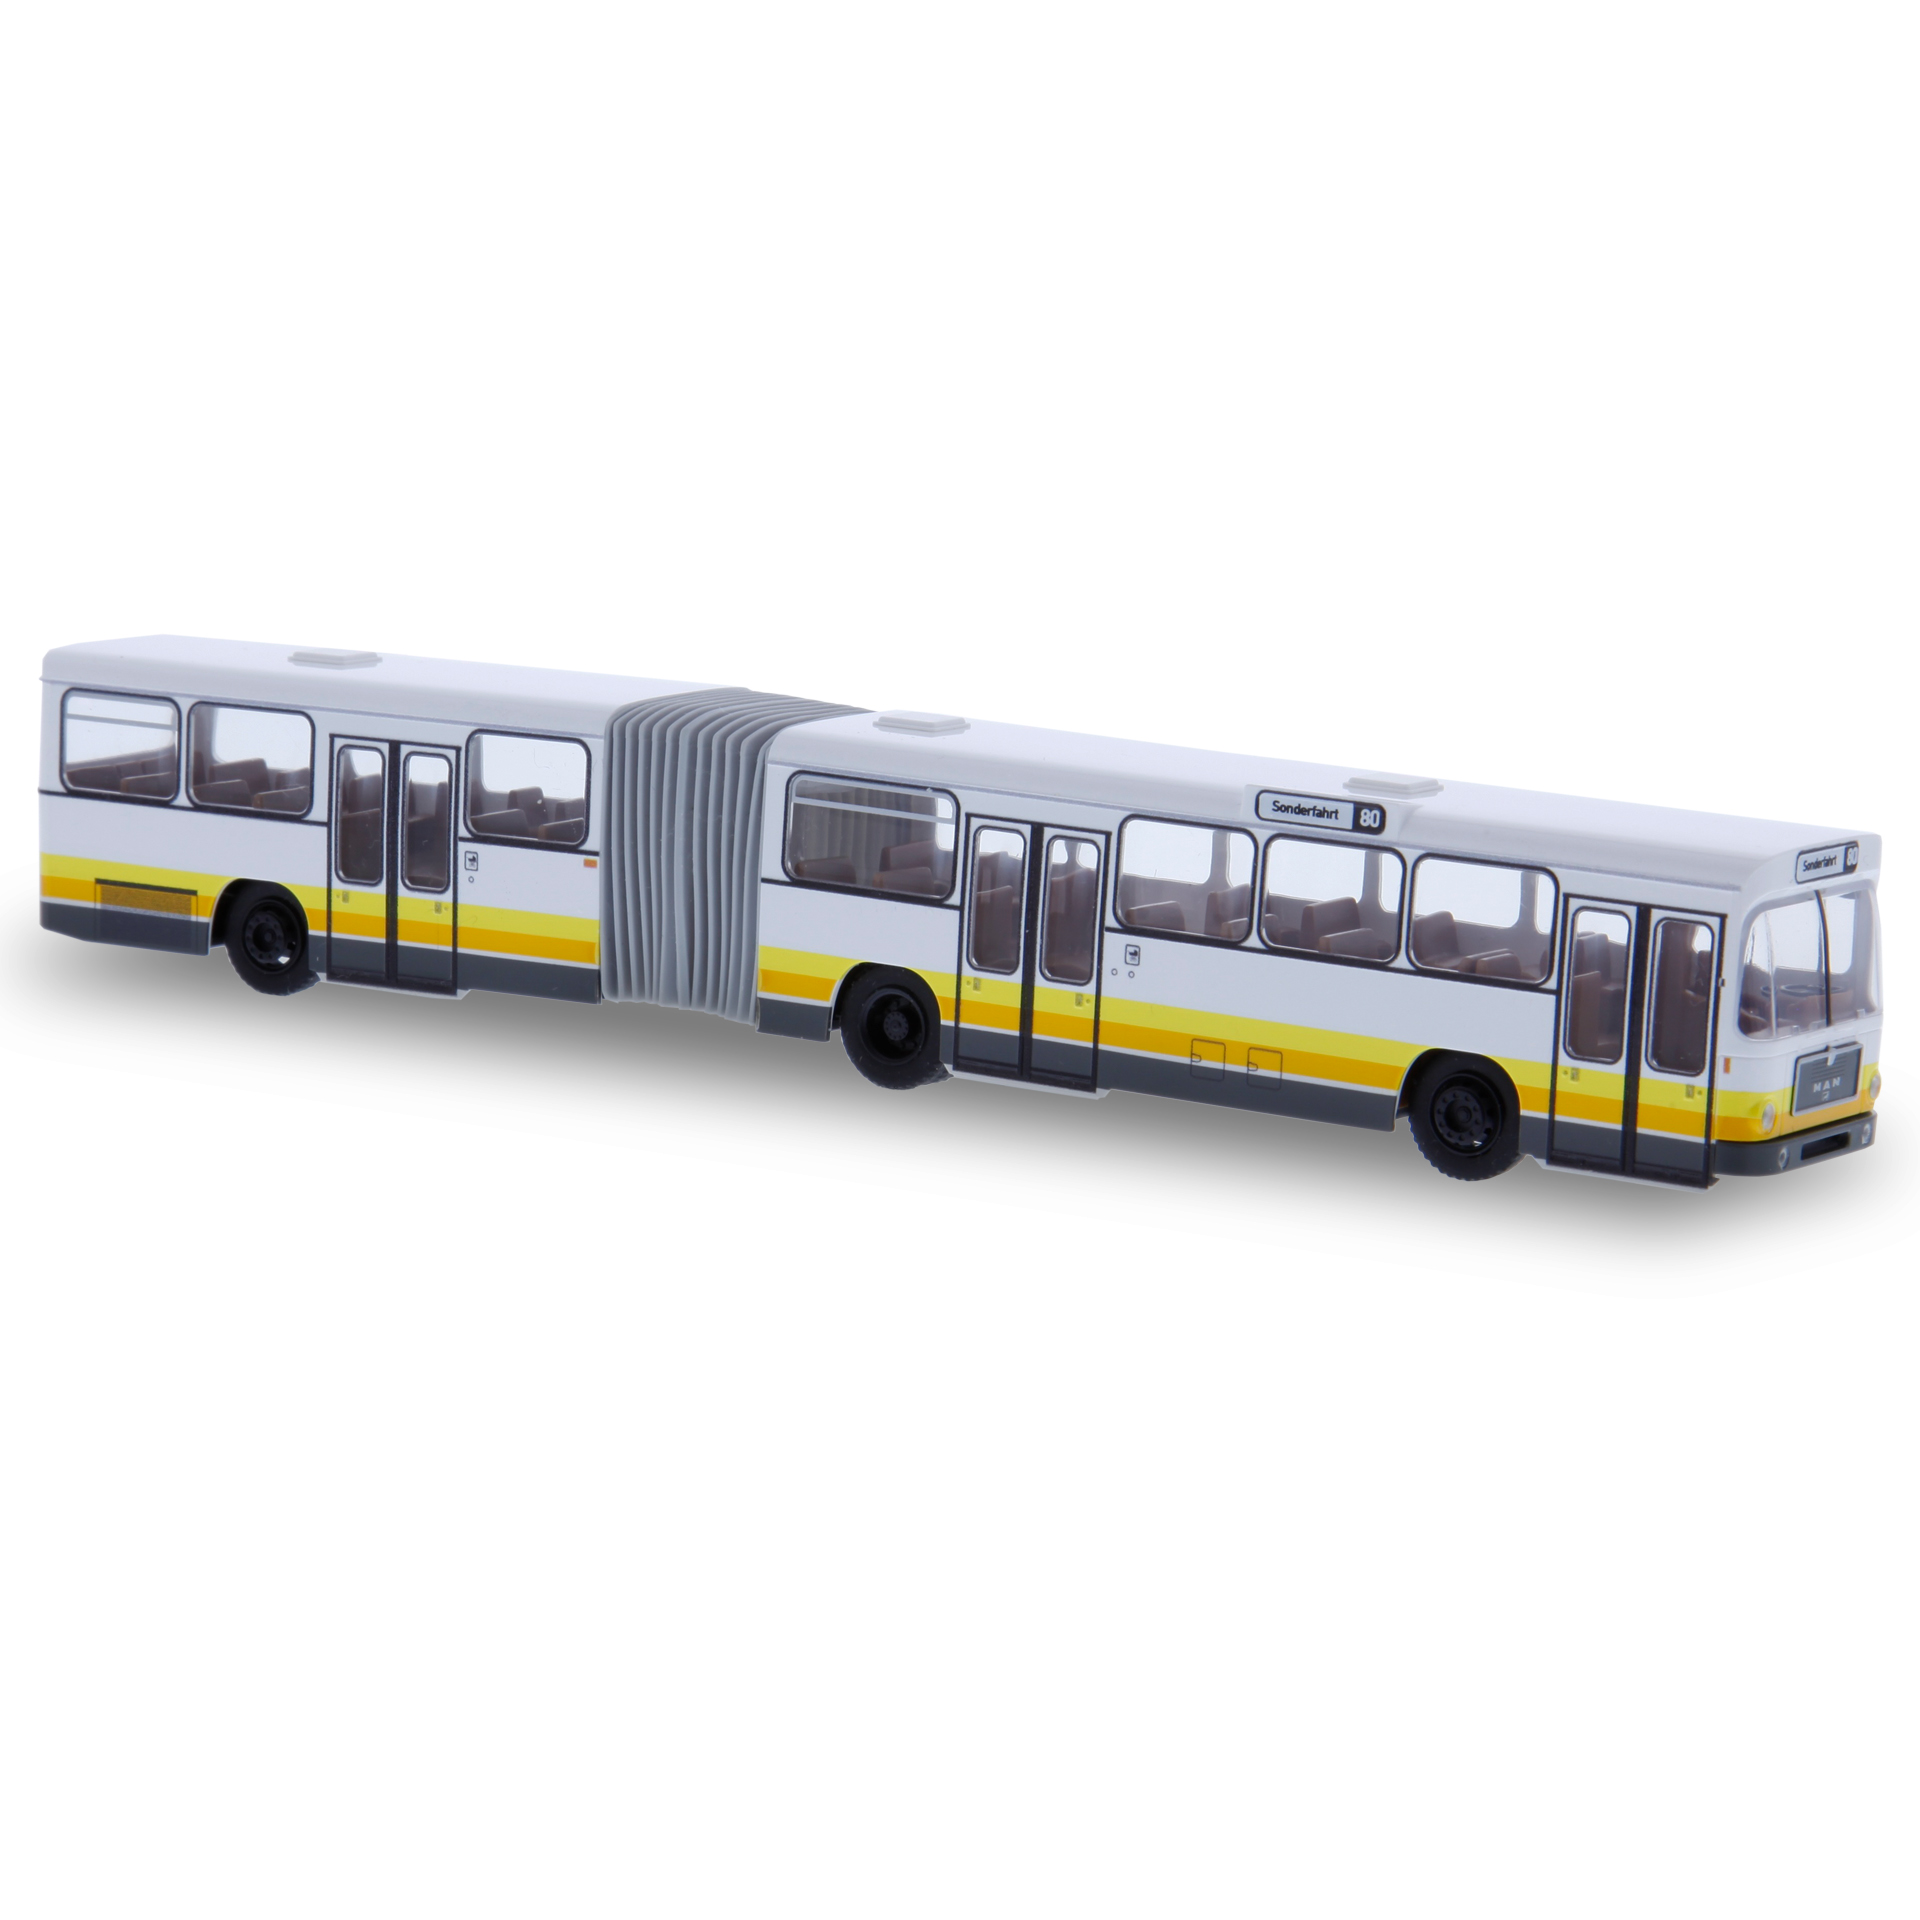 MAN Busmodell SG 220 Gelenkbus Vorführdesign